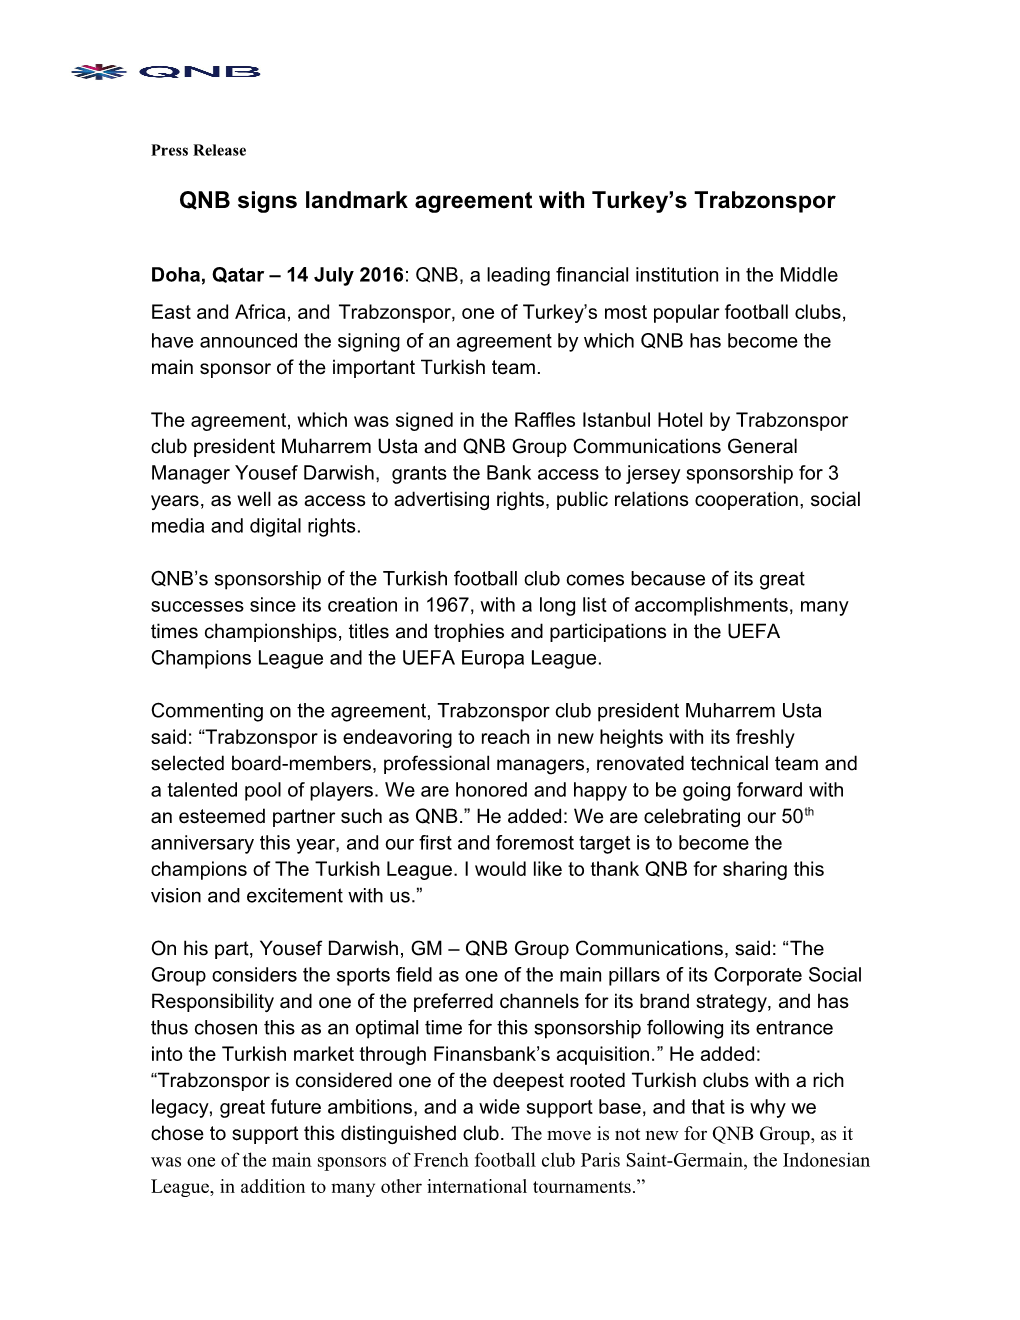 QNB Signs Landmark Agreement with Turkey Strabzonspor